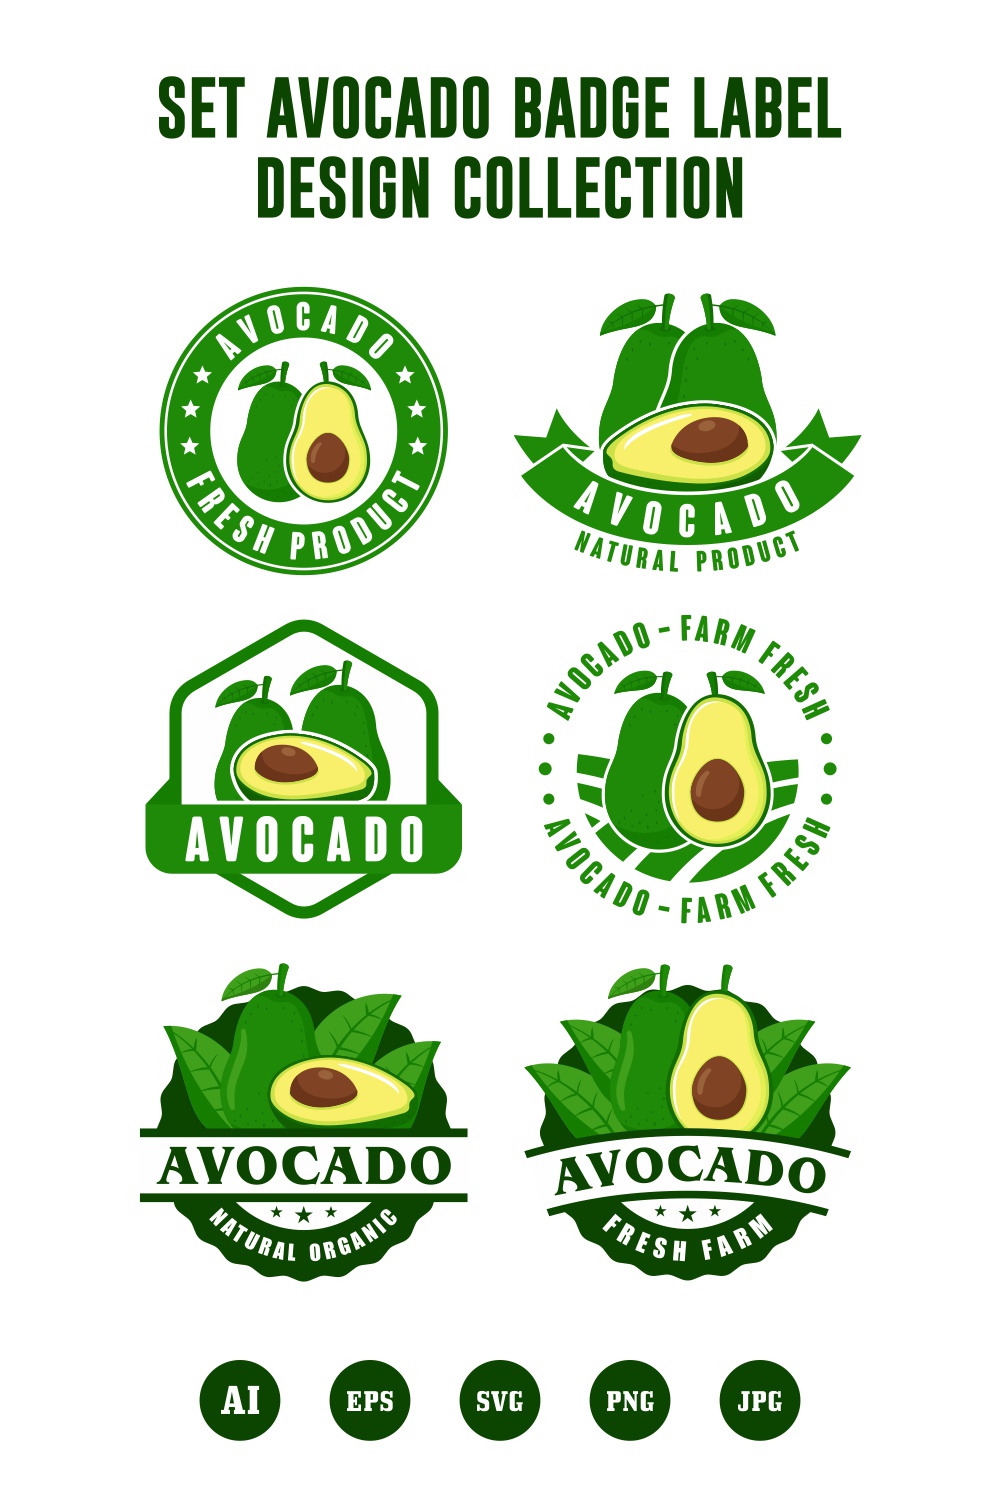 Set Avocado badge label design collection - $6 pinterest preview image.